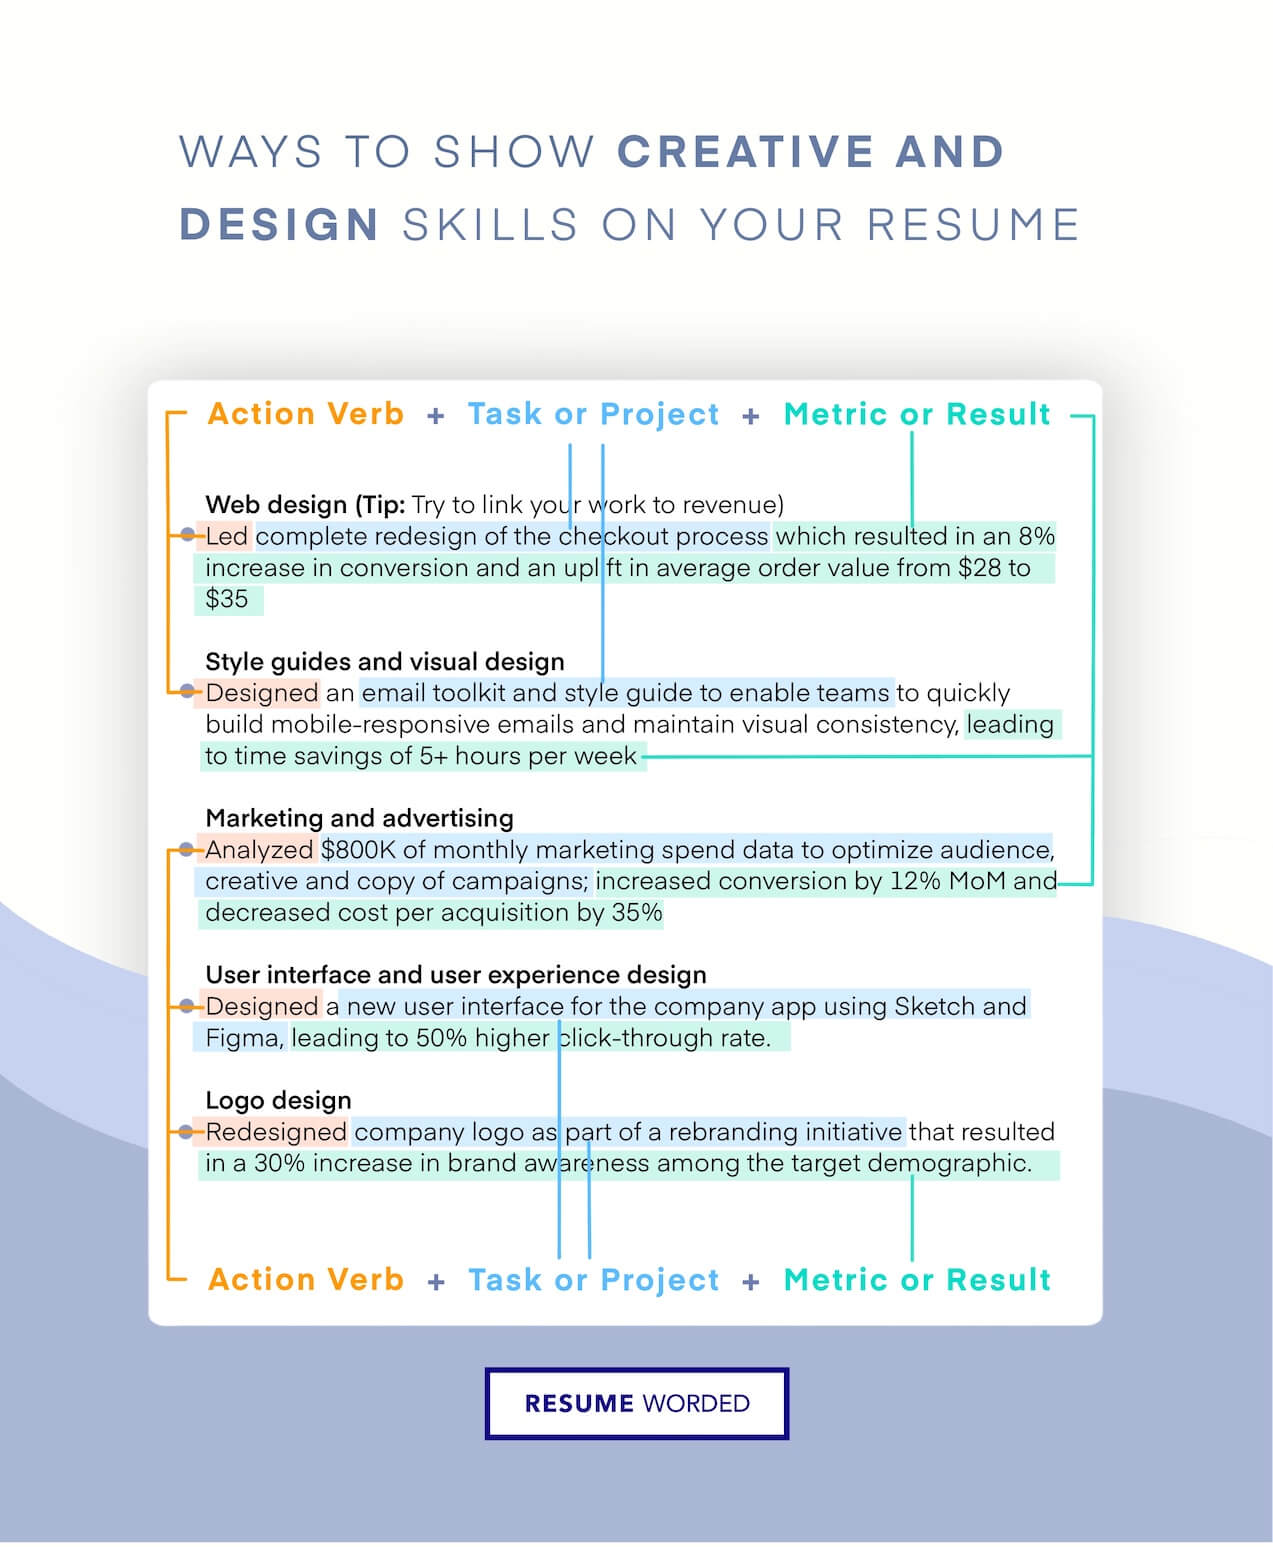 Showcase your design process - Entry Level UX Designer Resume